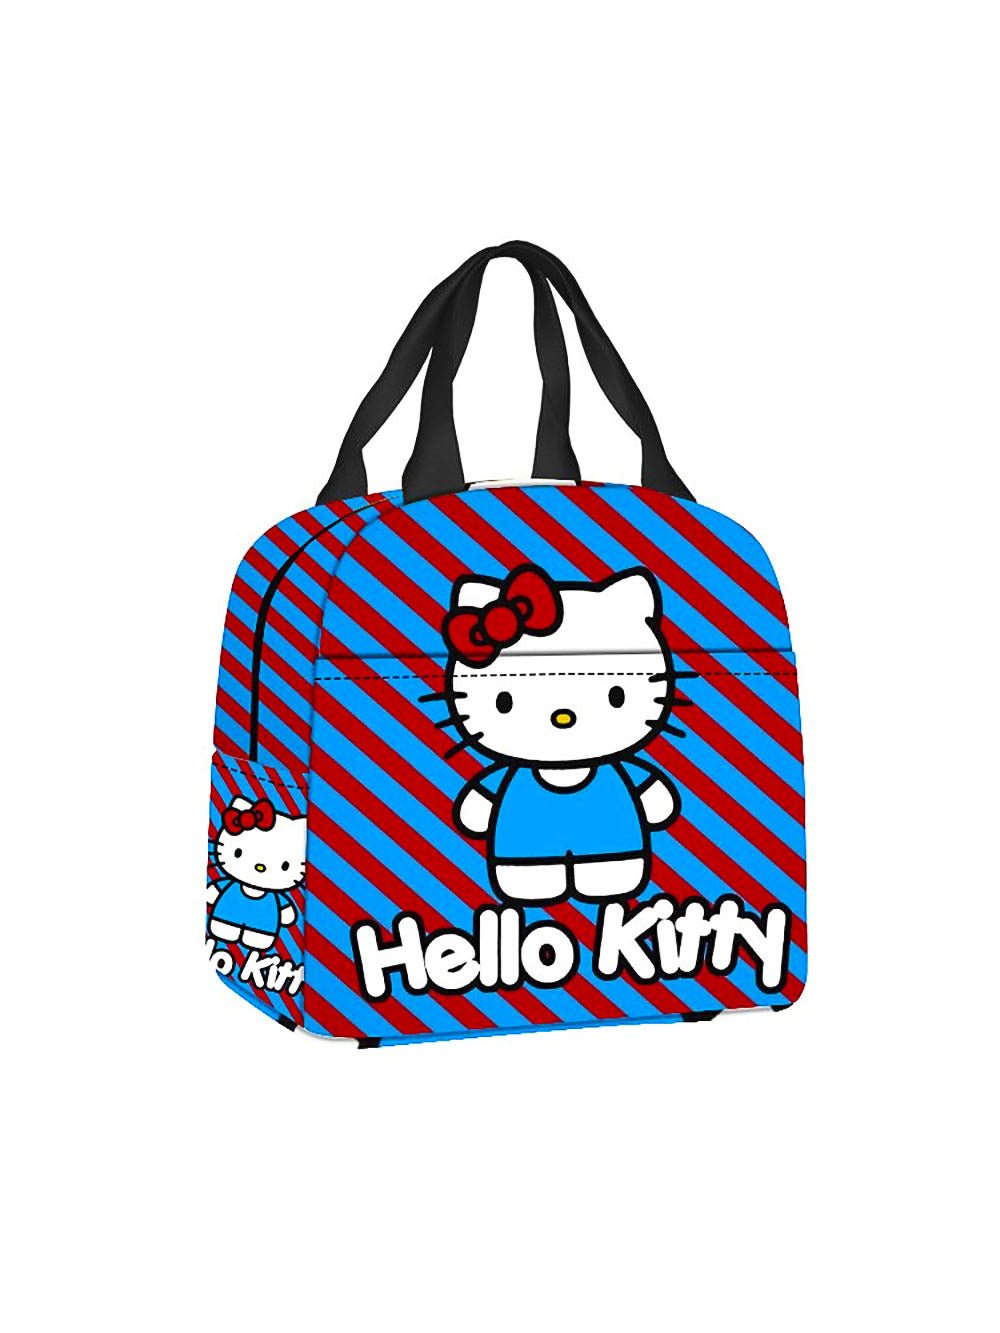 Sanrio Hello Kitty Lunch Box (Bear) 878553